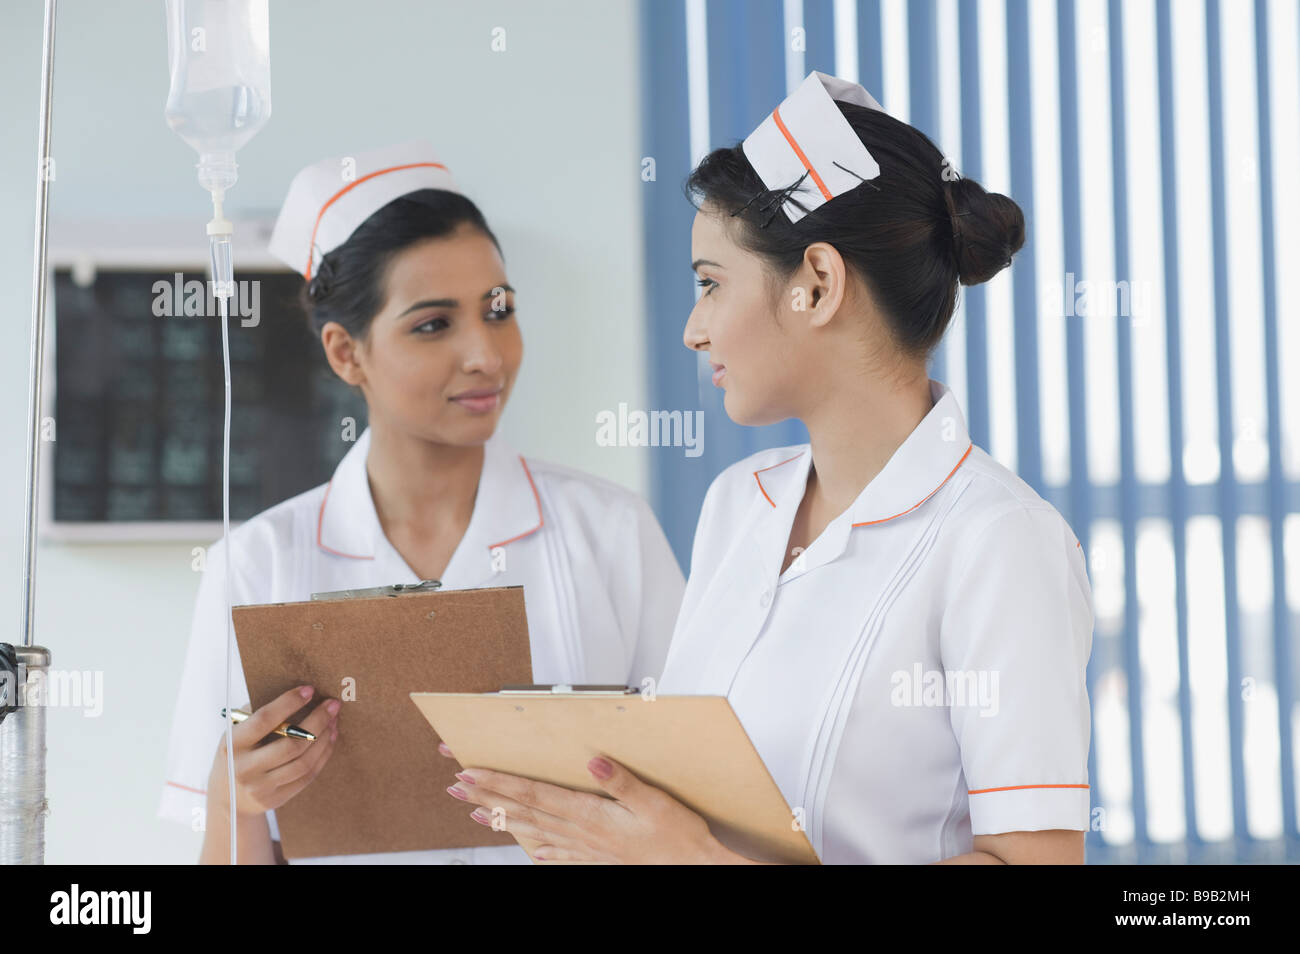 Two female nurses holding clipboards Stock Photo